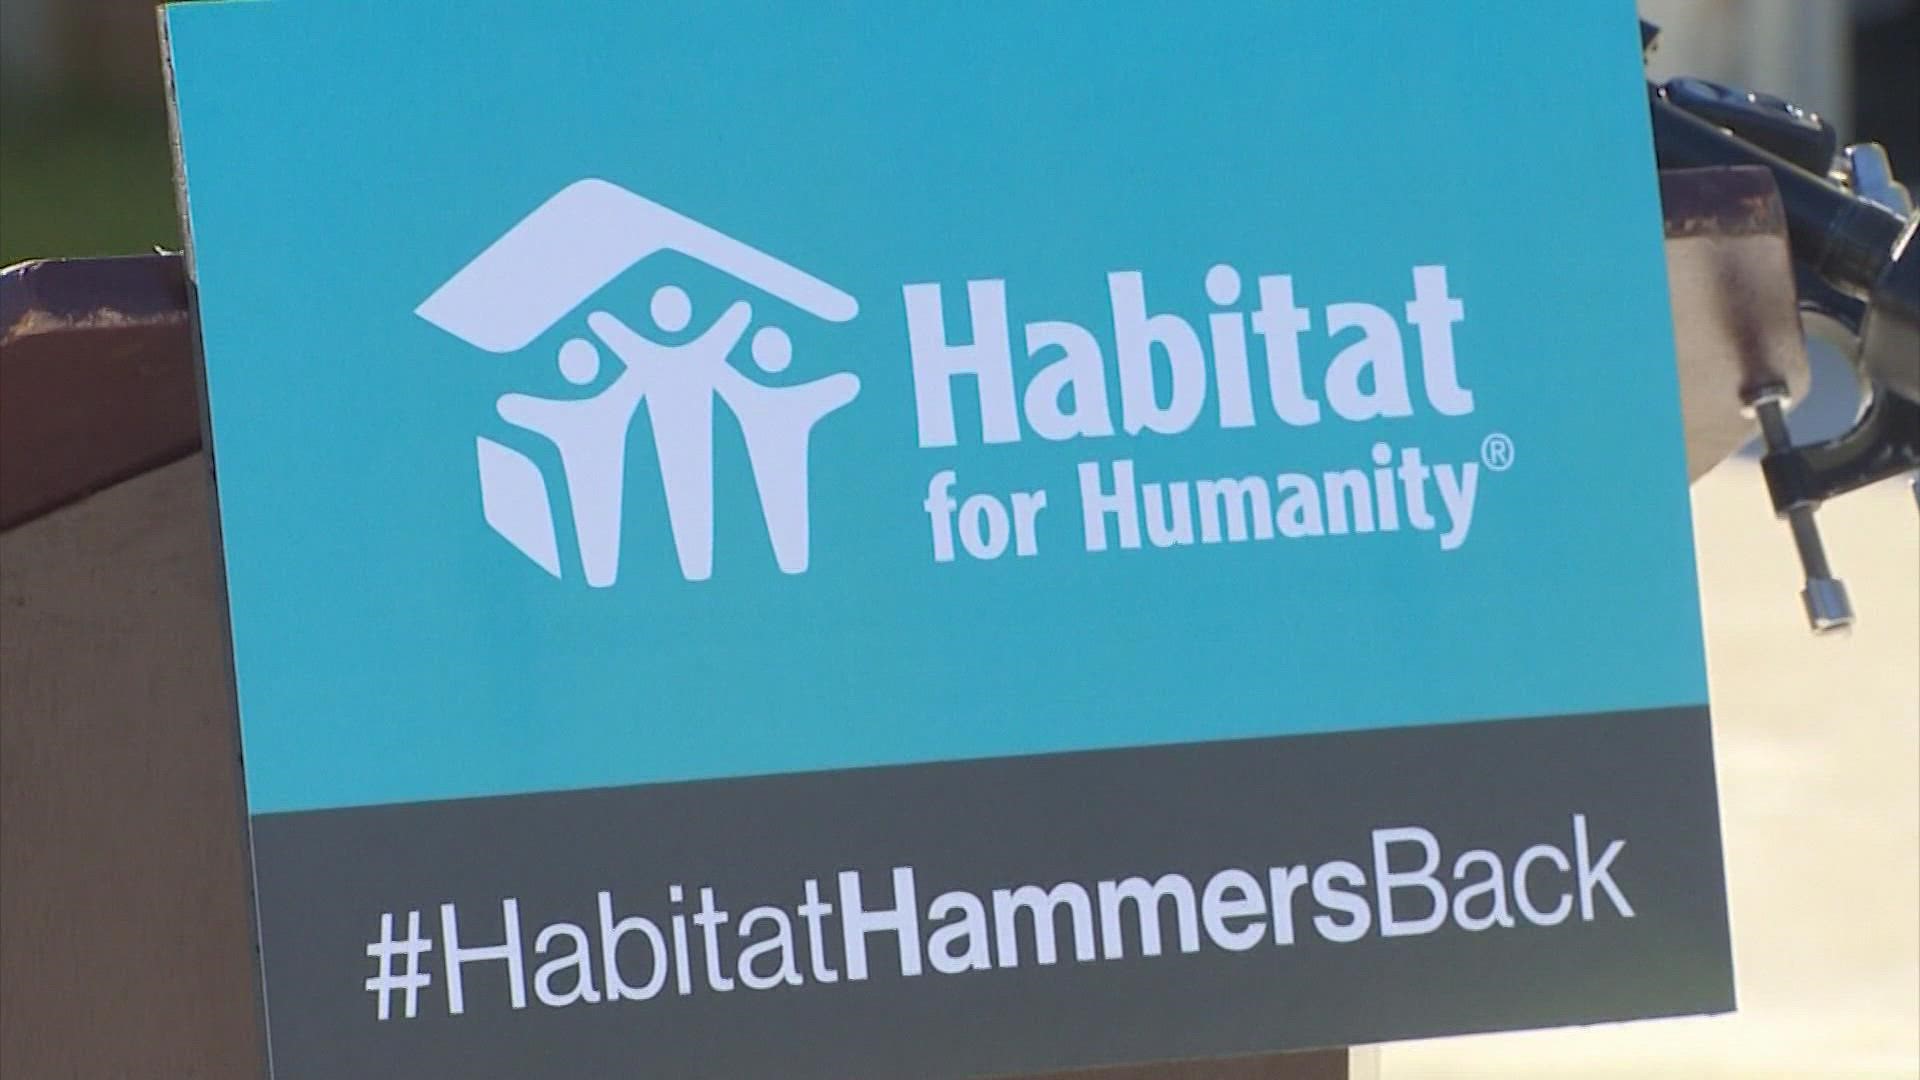 Houston Habitat for Humanity will receive $11 million of Scott's donation.